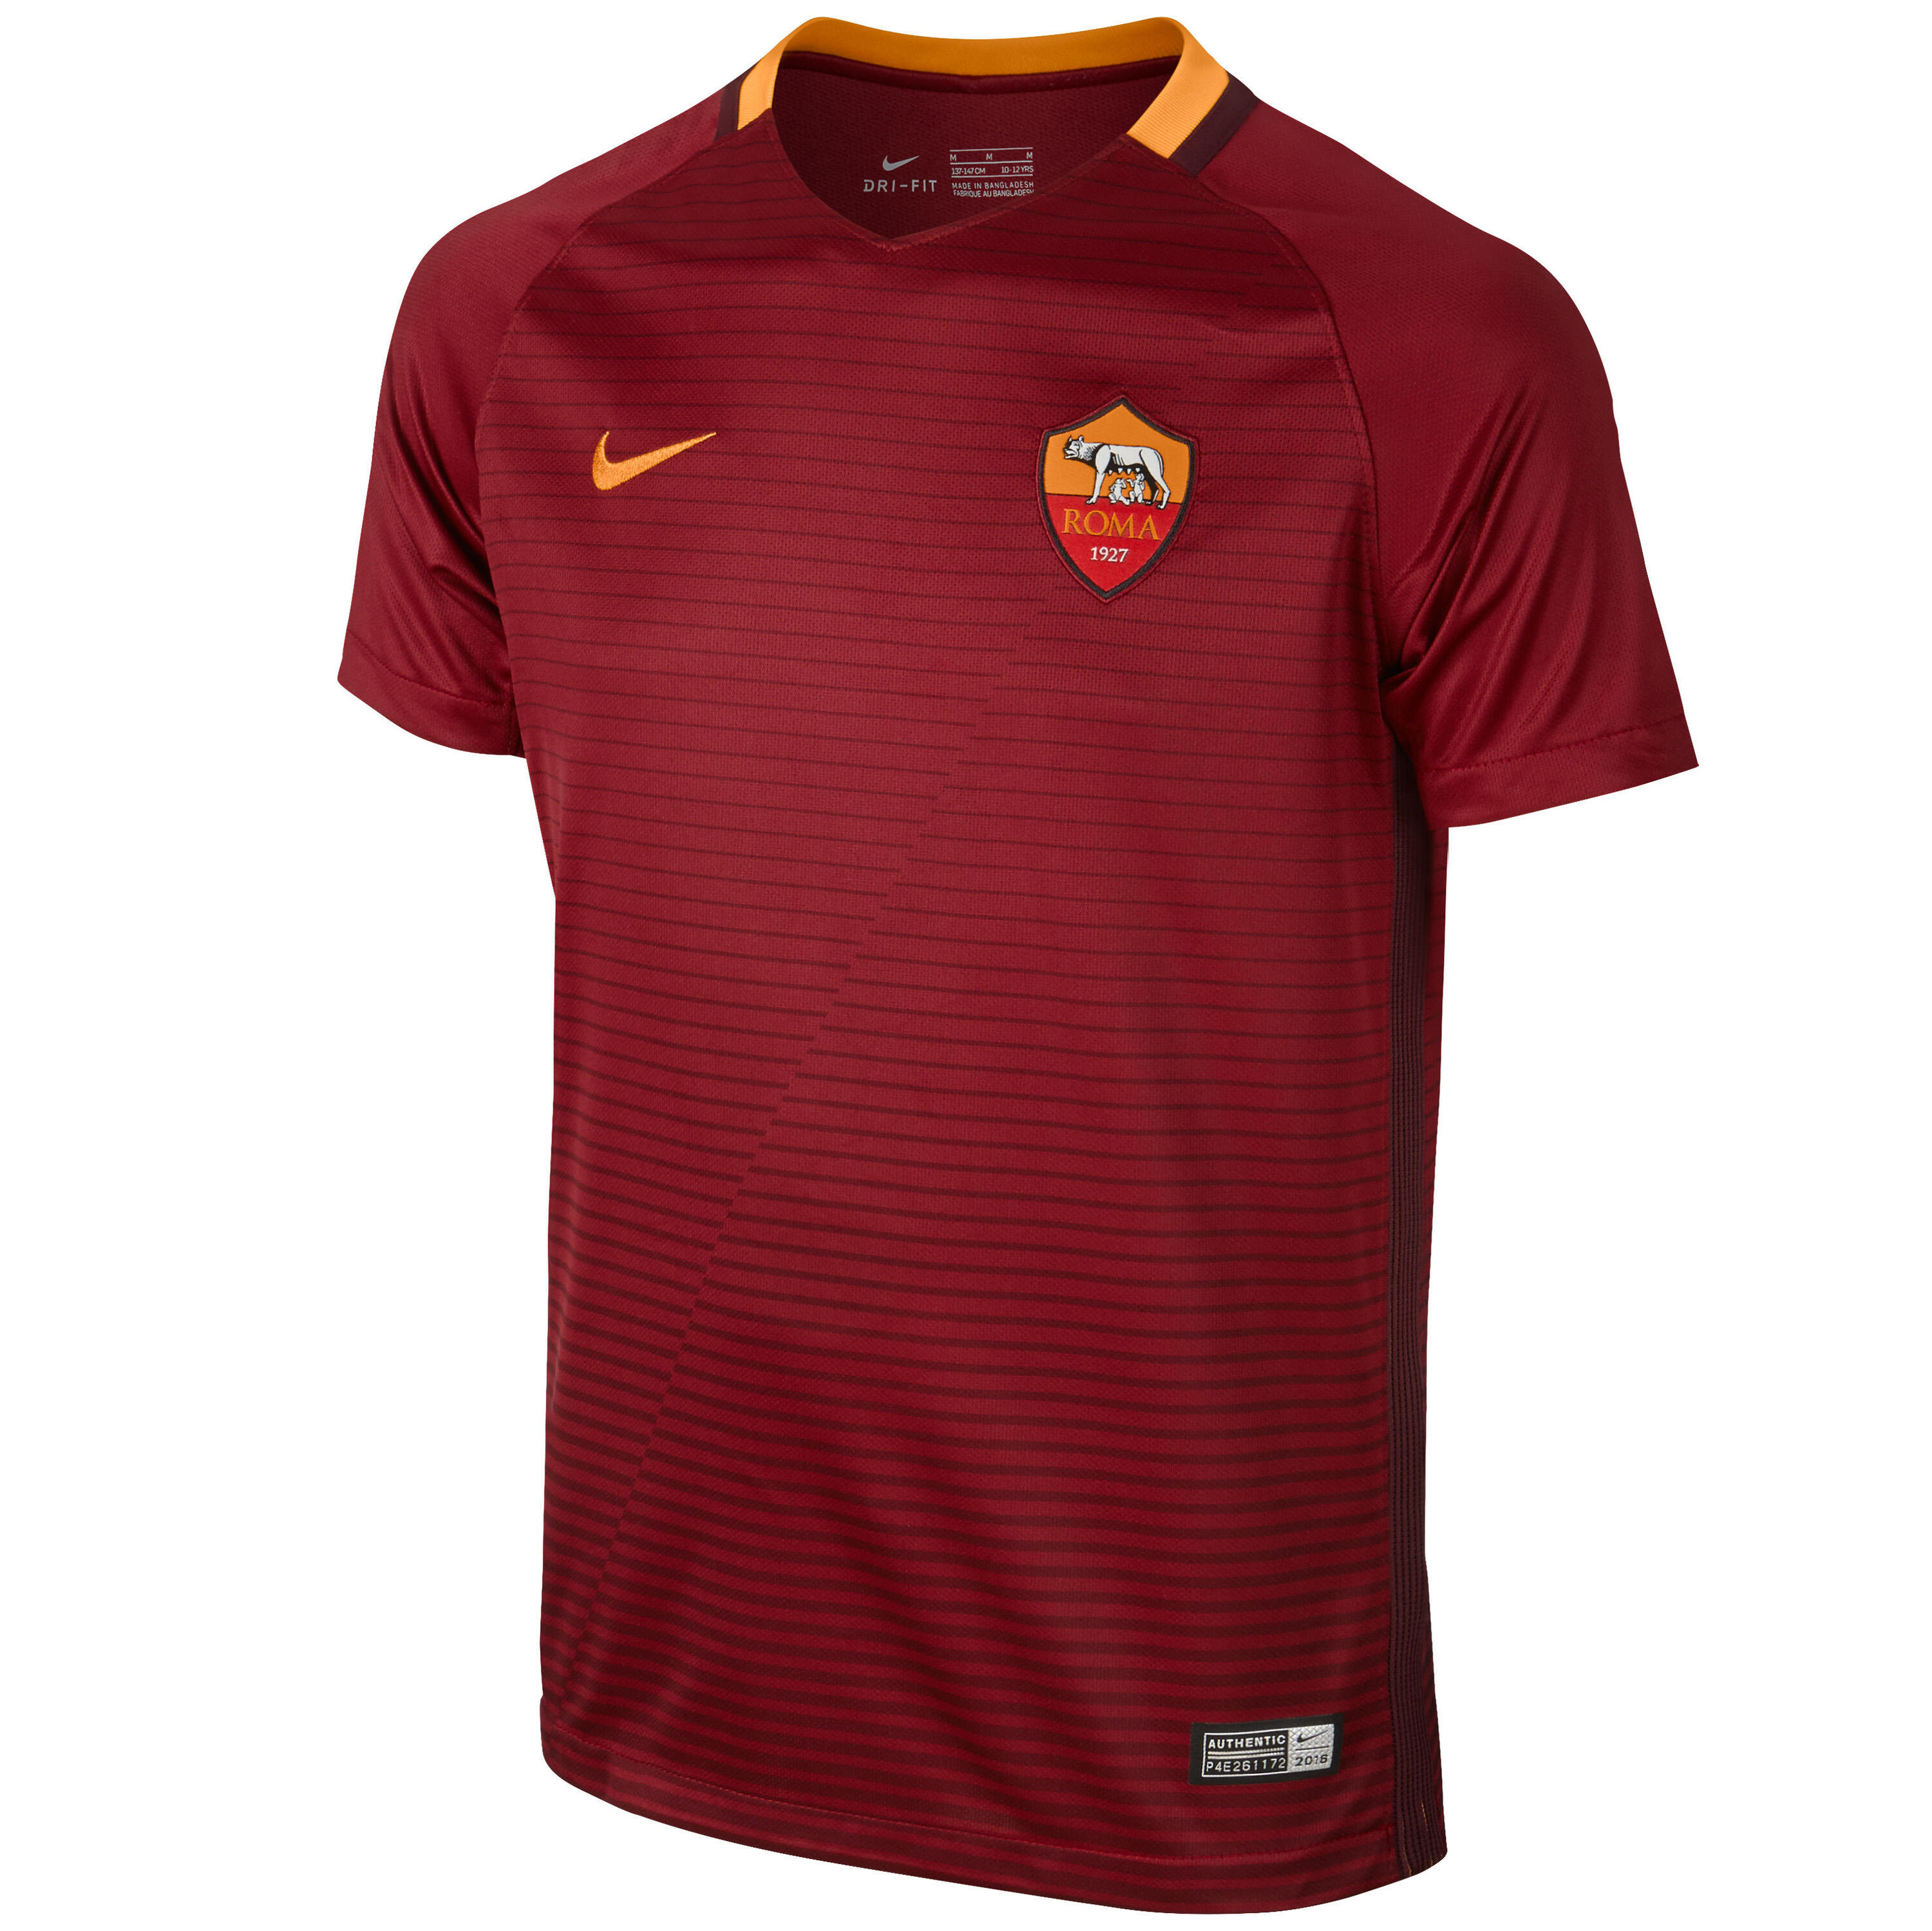 NIKE AS Roma Adult Football Shirt - Replica Red